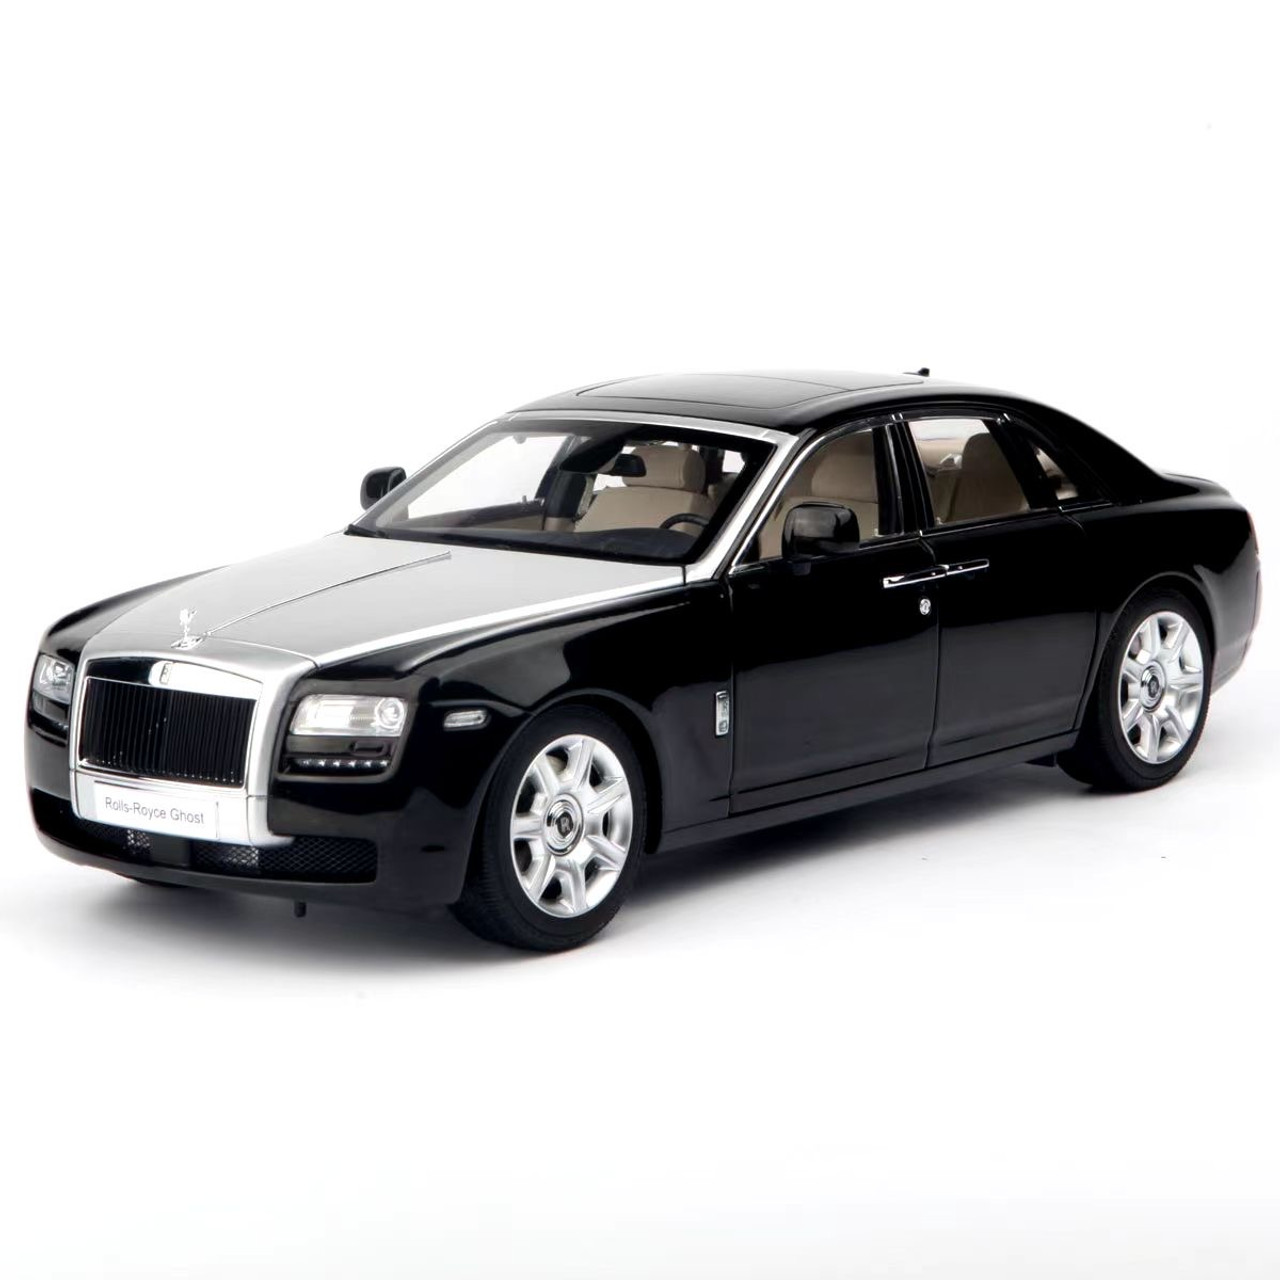 1/18 Kyosho Rolls-Royce Ghost (Black with Silver Hood) Diecast Car Model